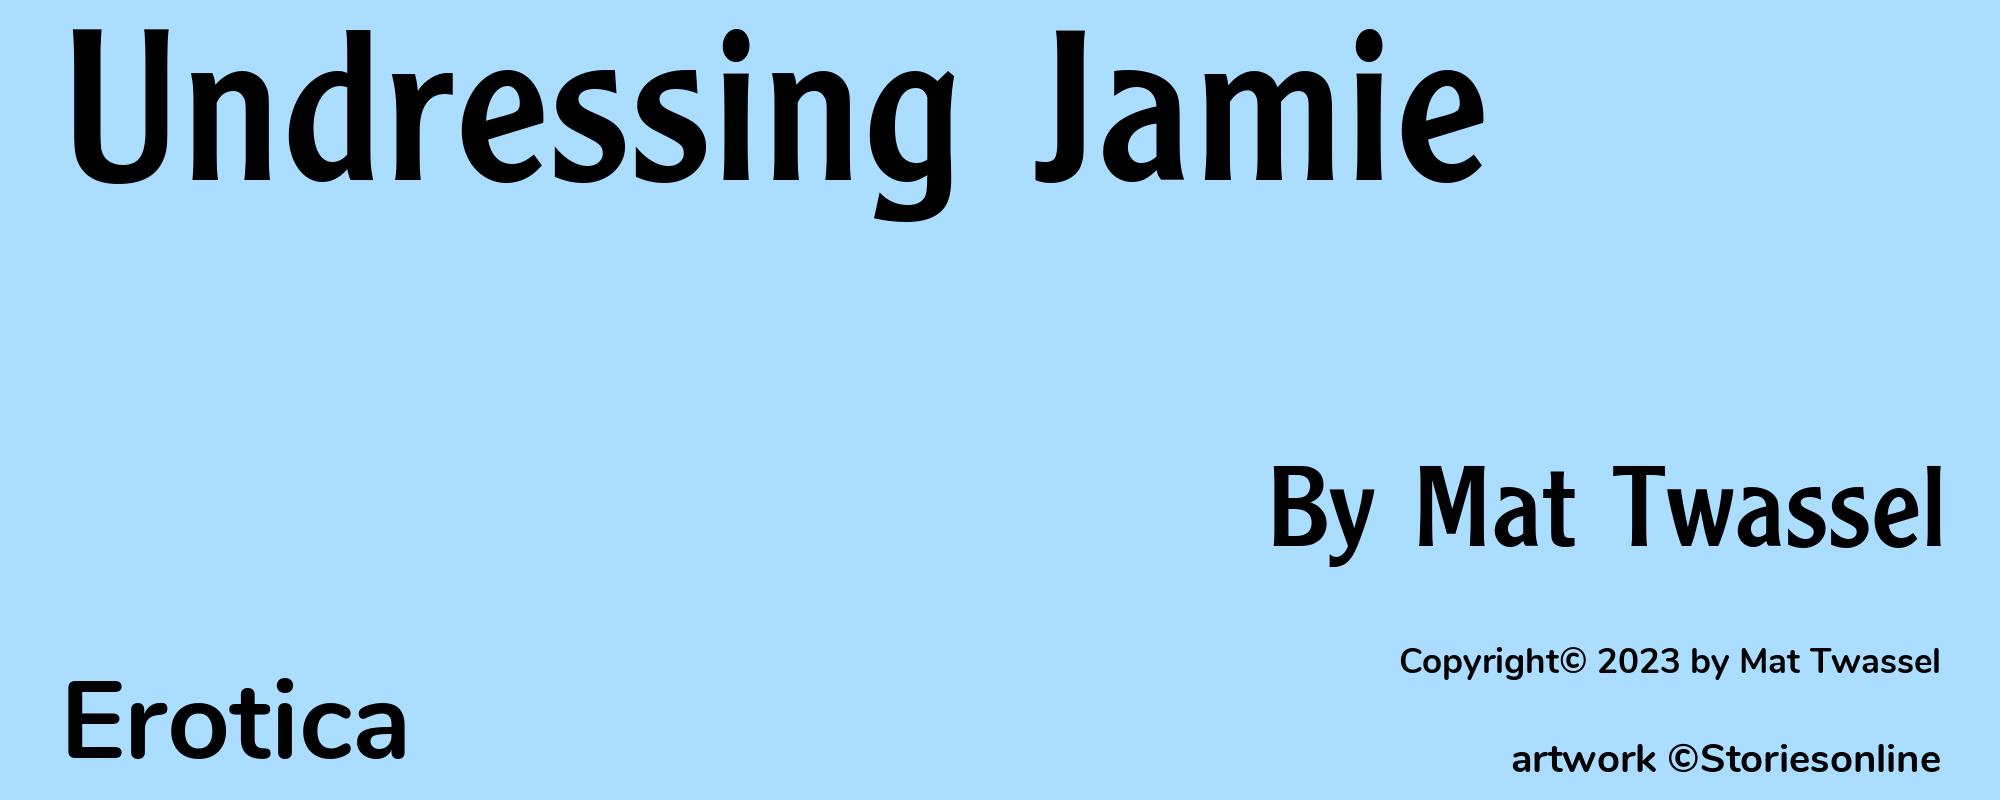 Undressing Jamie - Cover